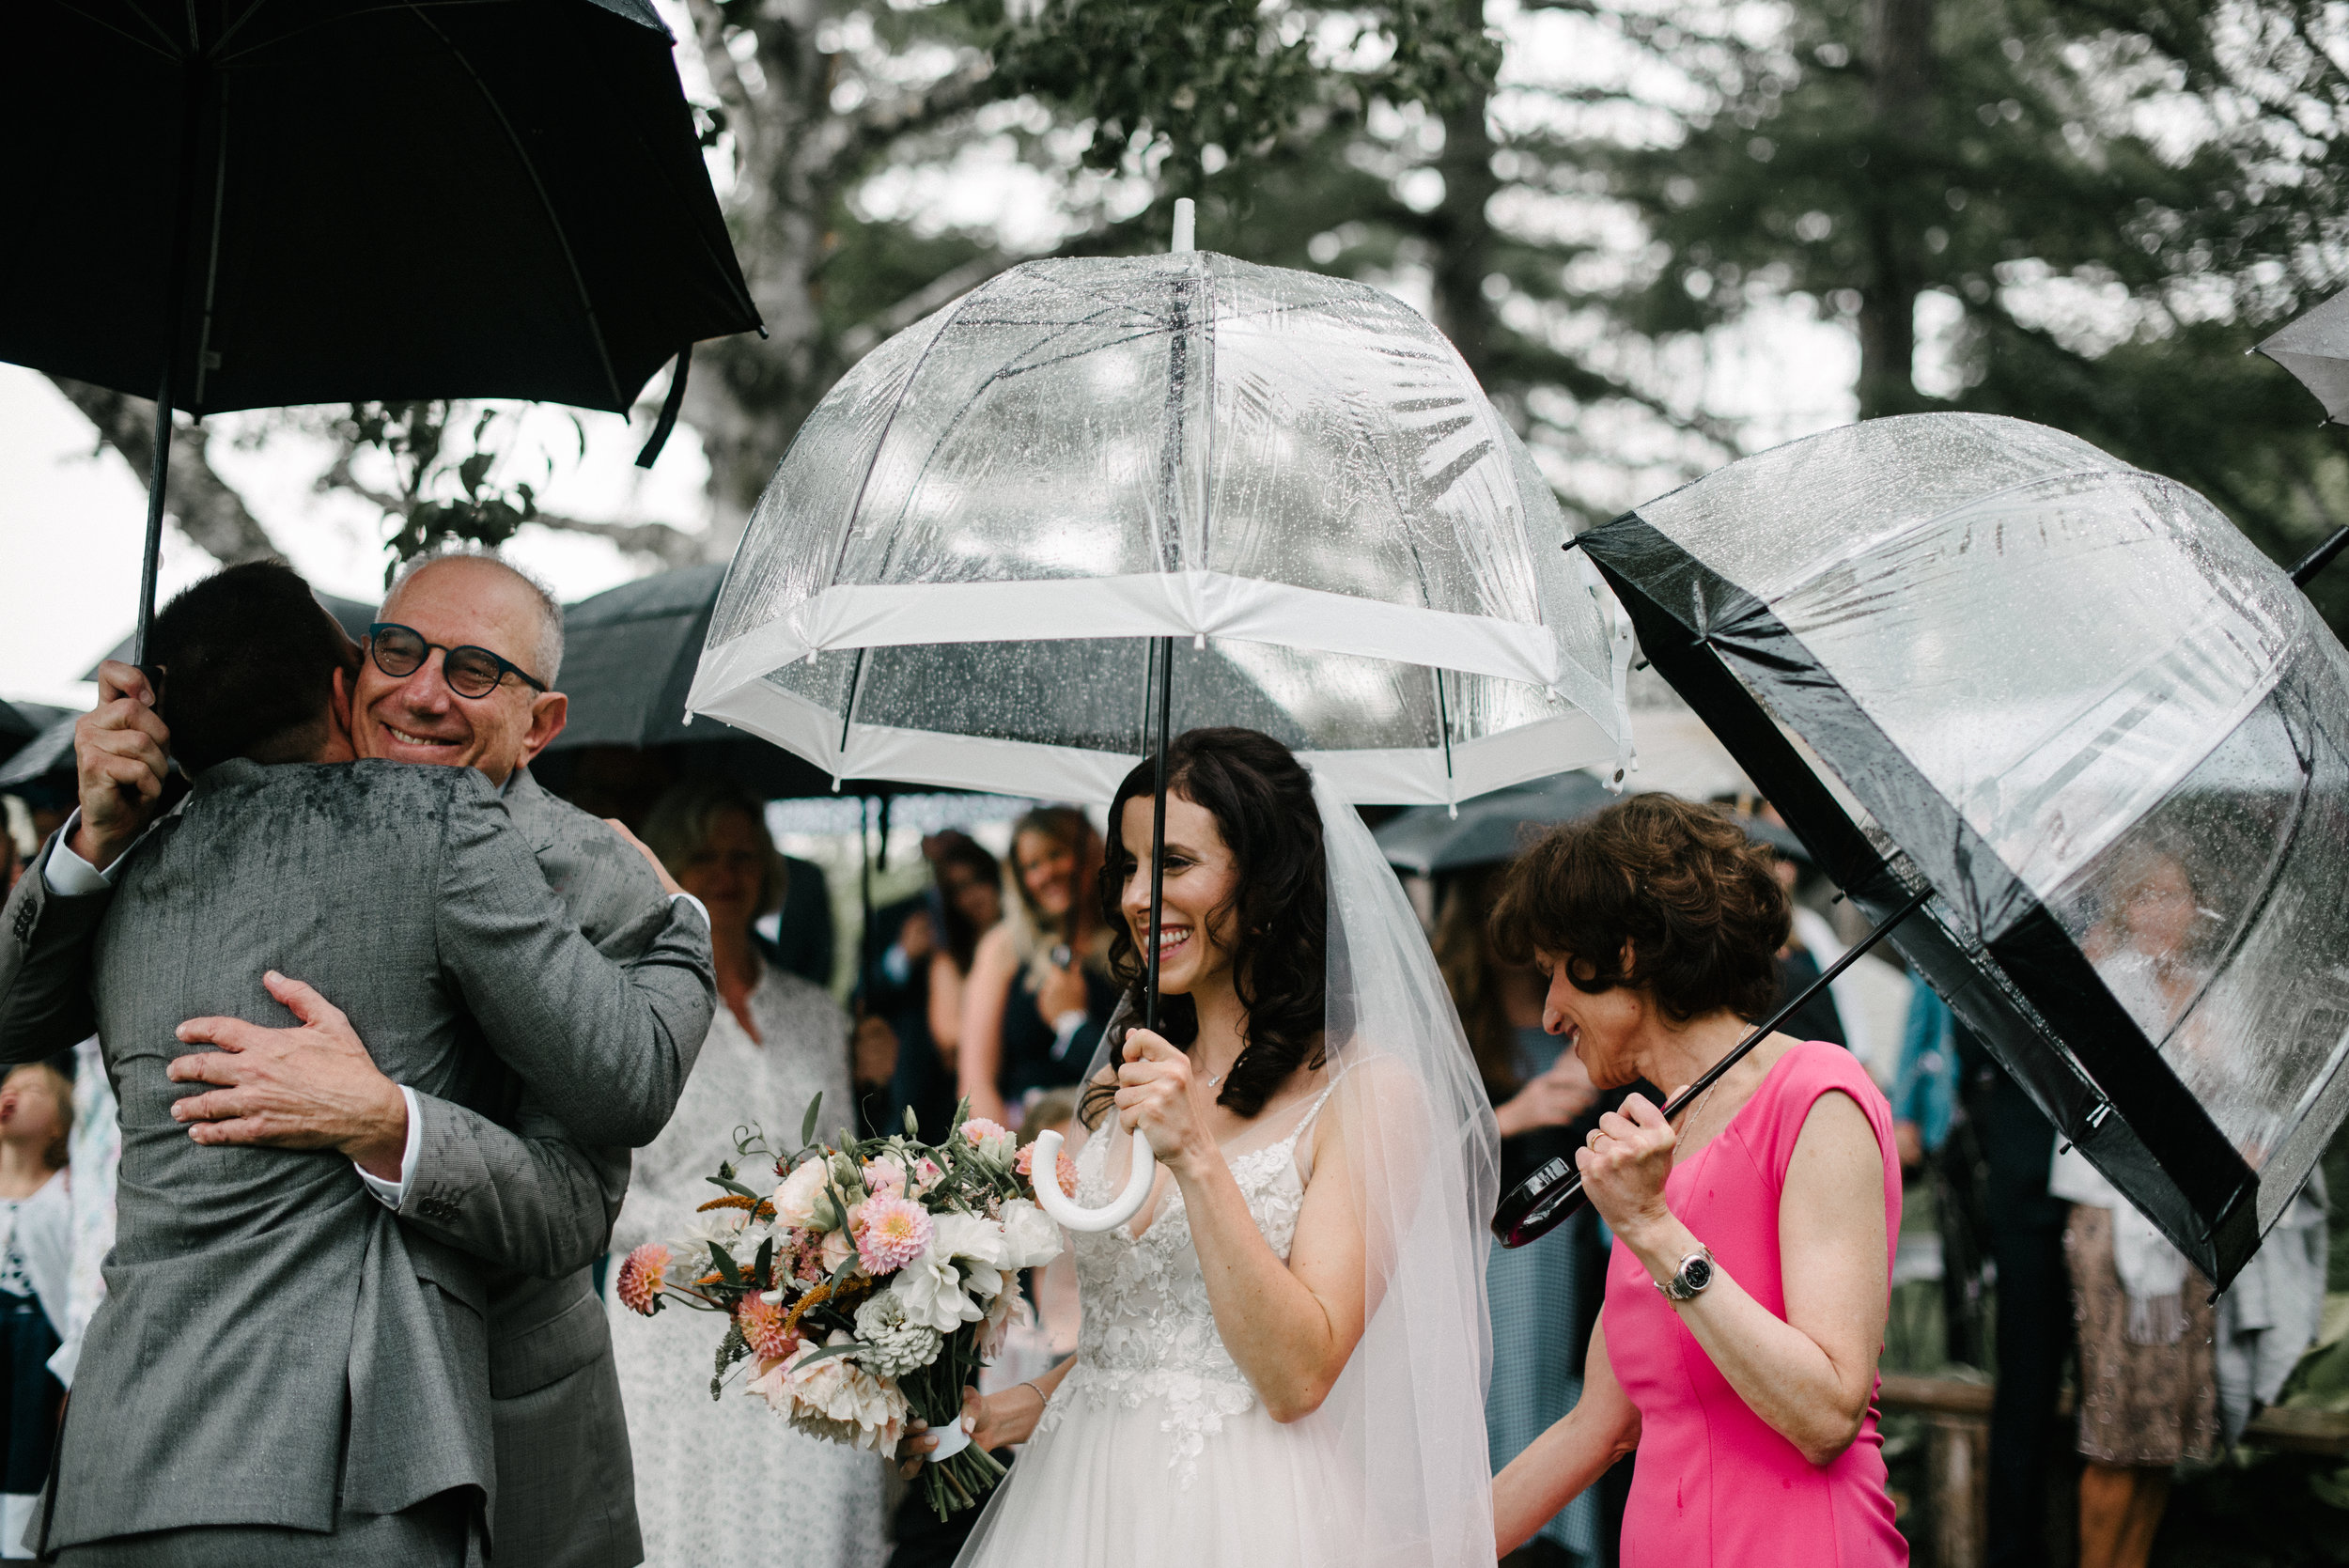 raining wedding day guests wedding photography.jpg